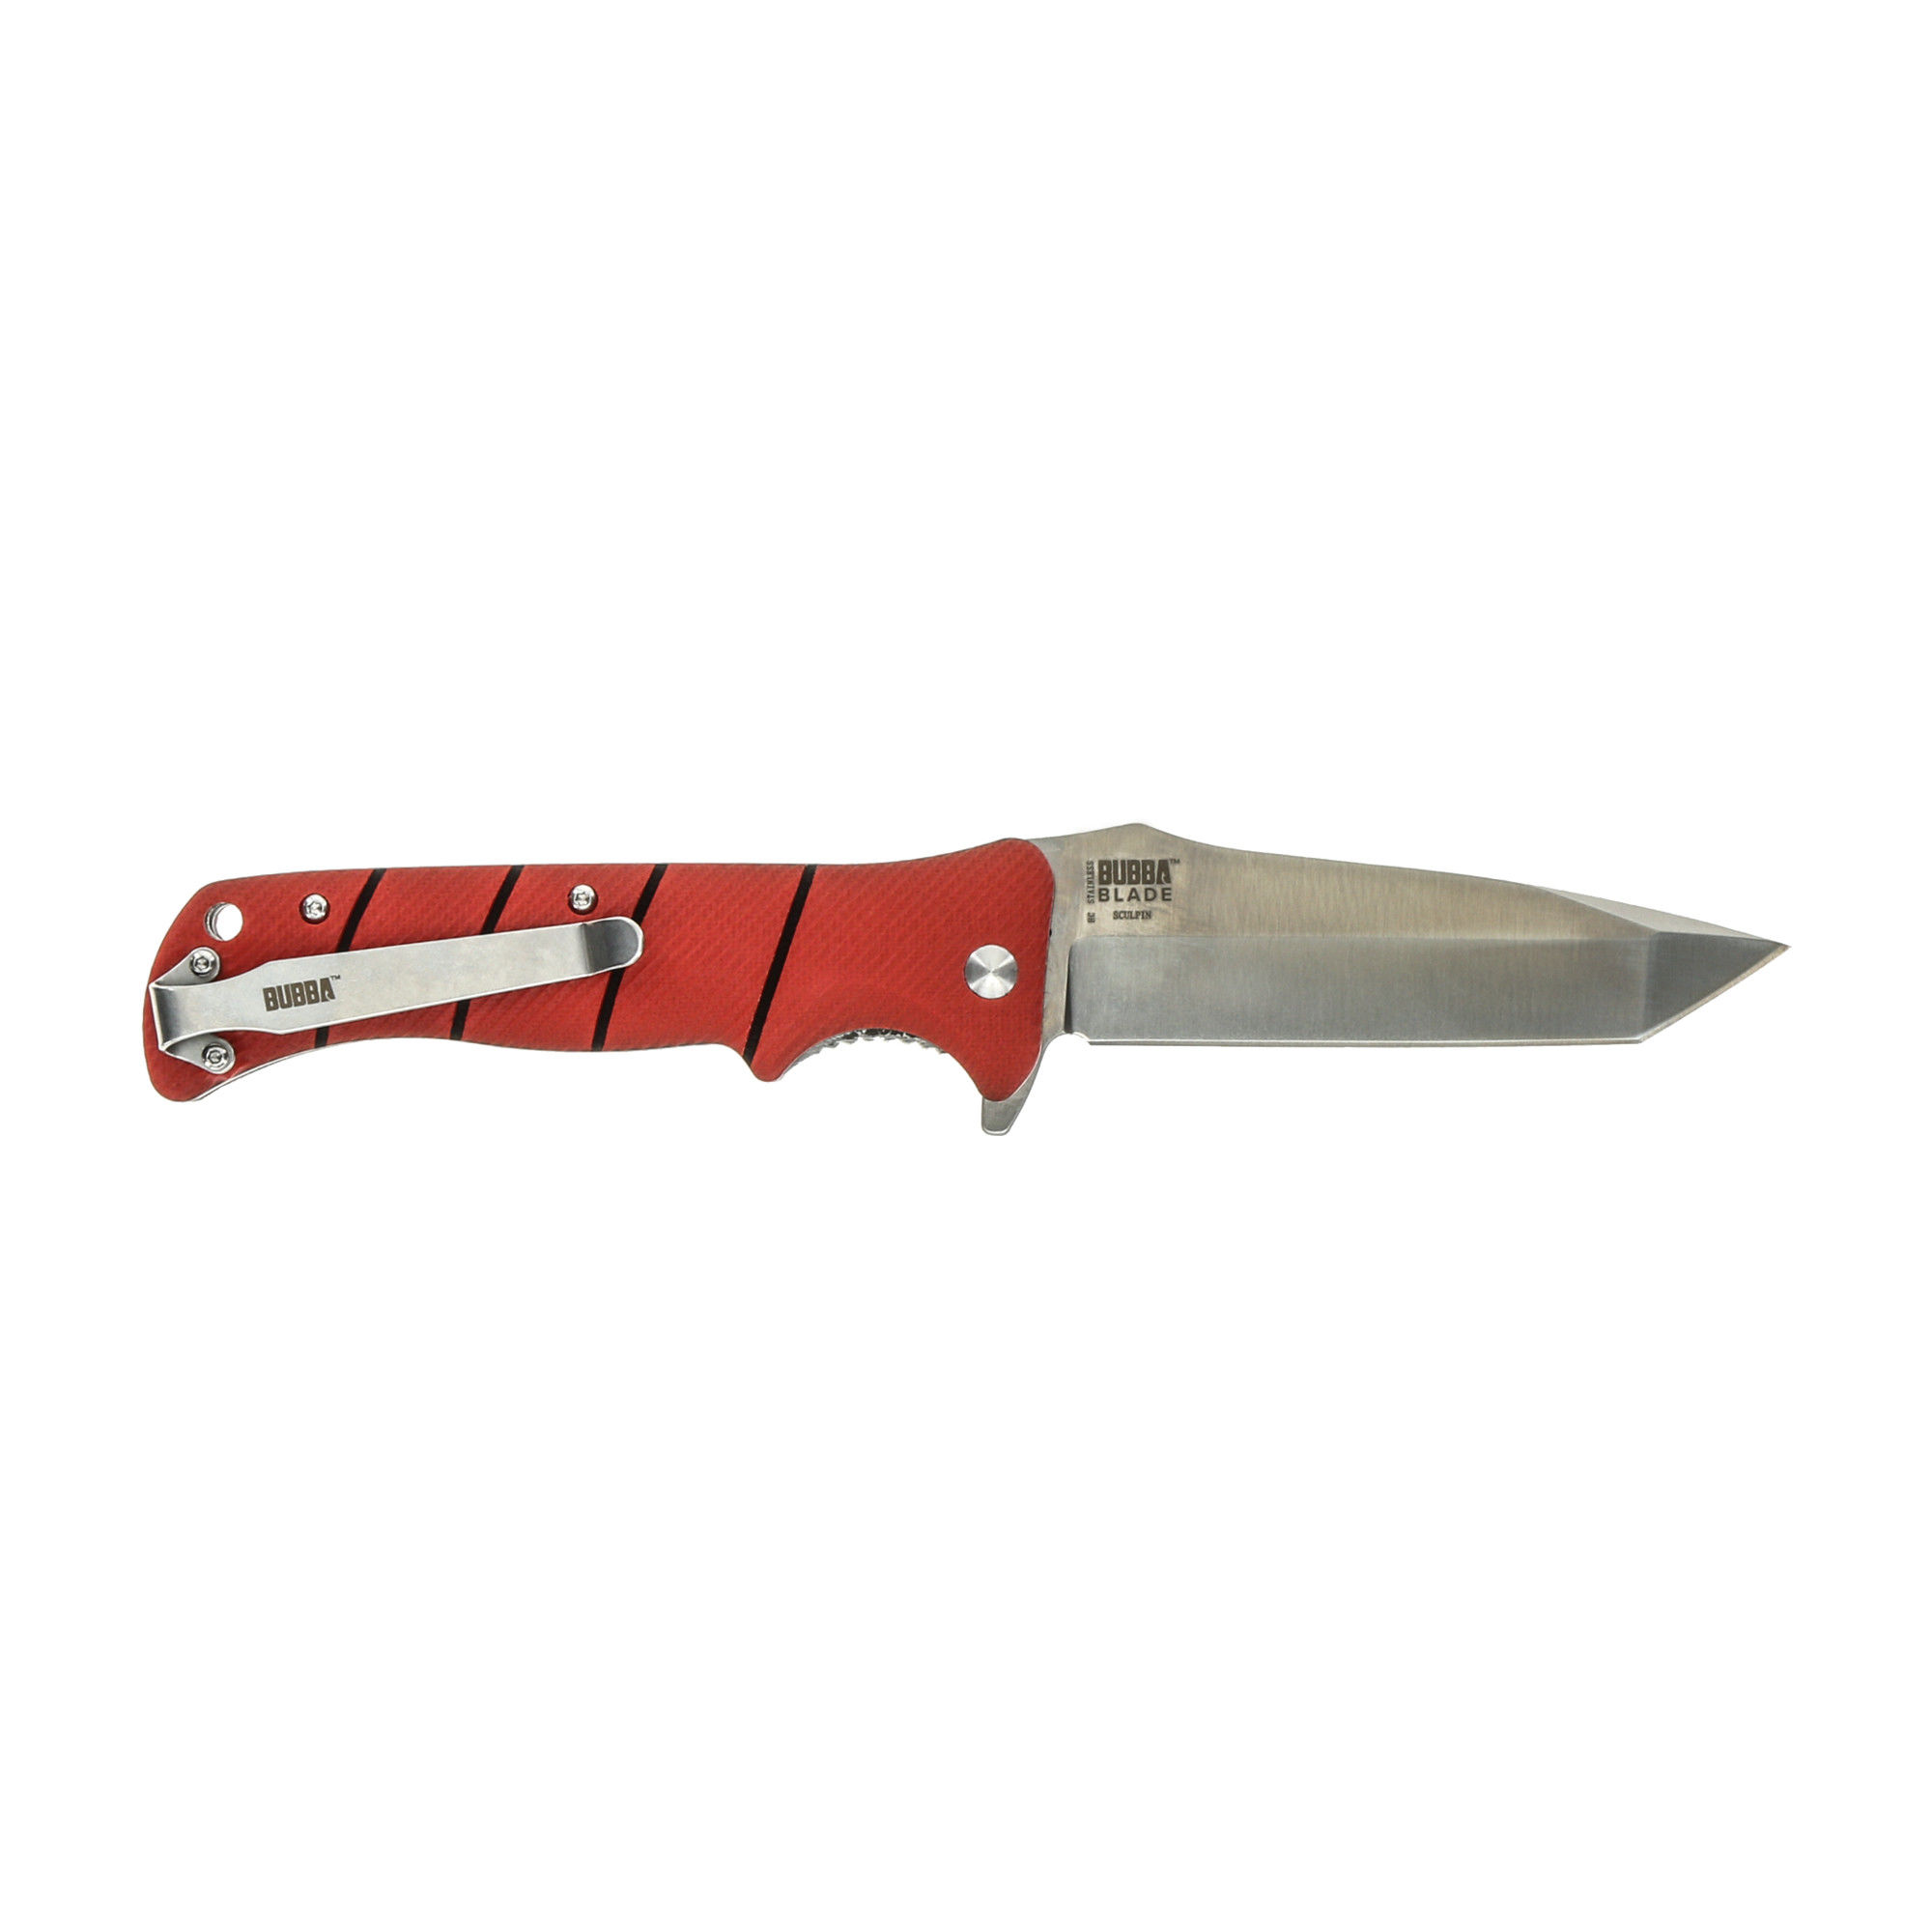 Bubba Blade Sculpin 4in Pocket Knife